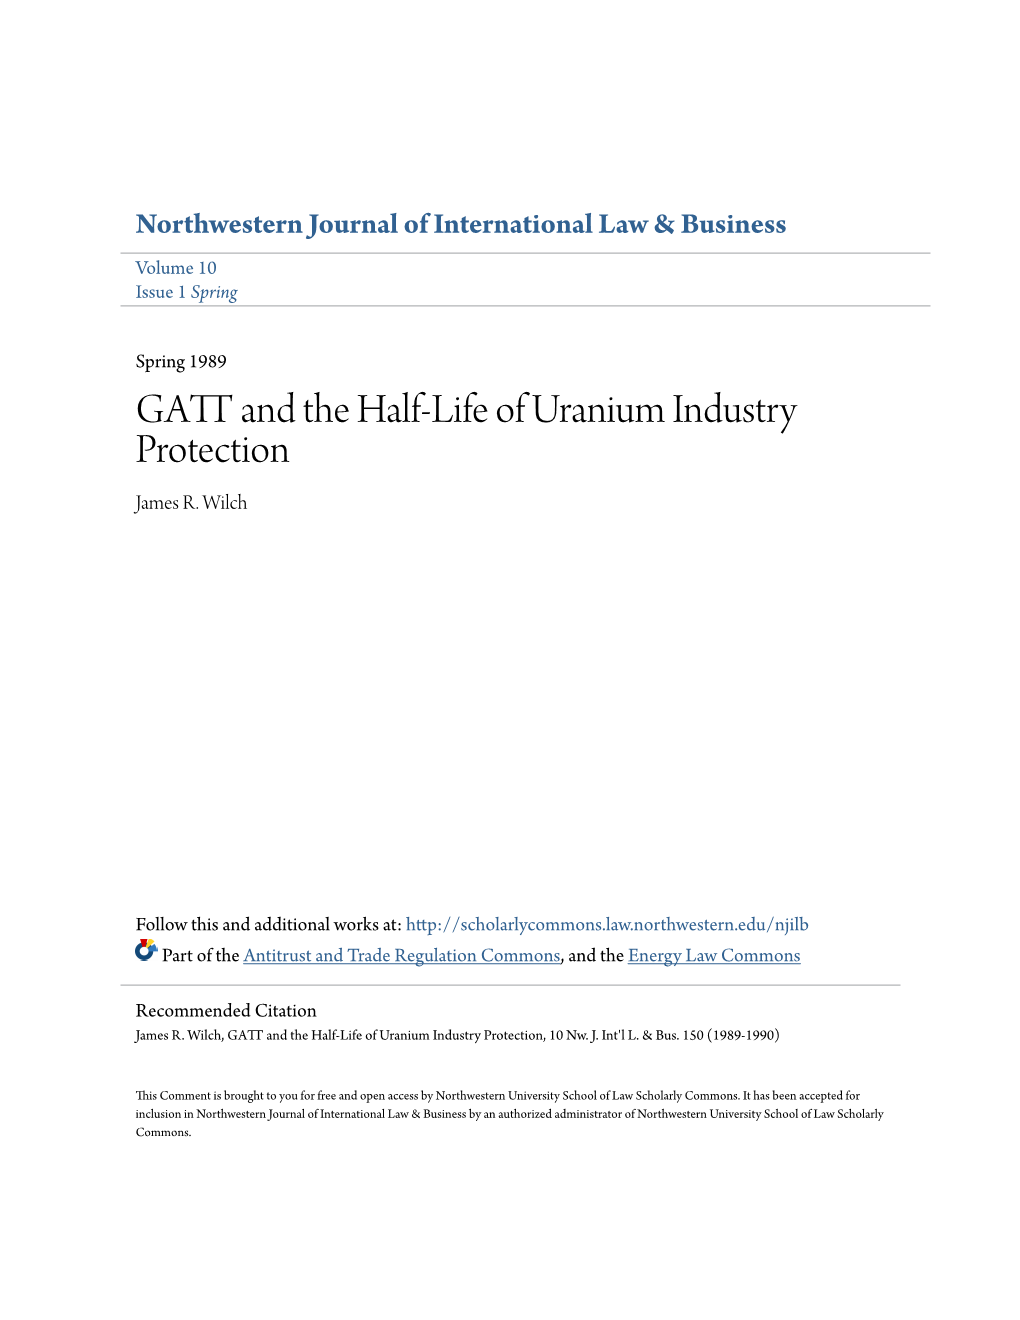 GATT and the Half-Life of Uranium Industry Protection